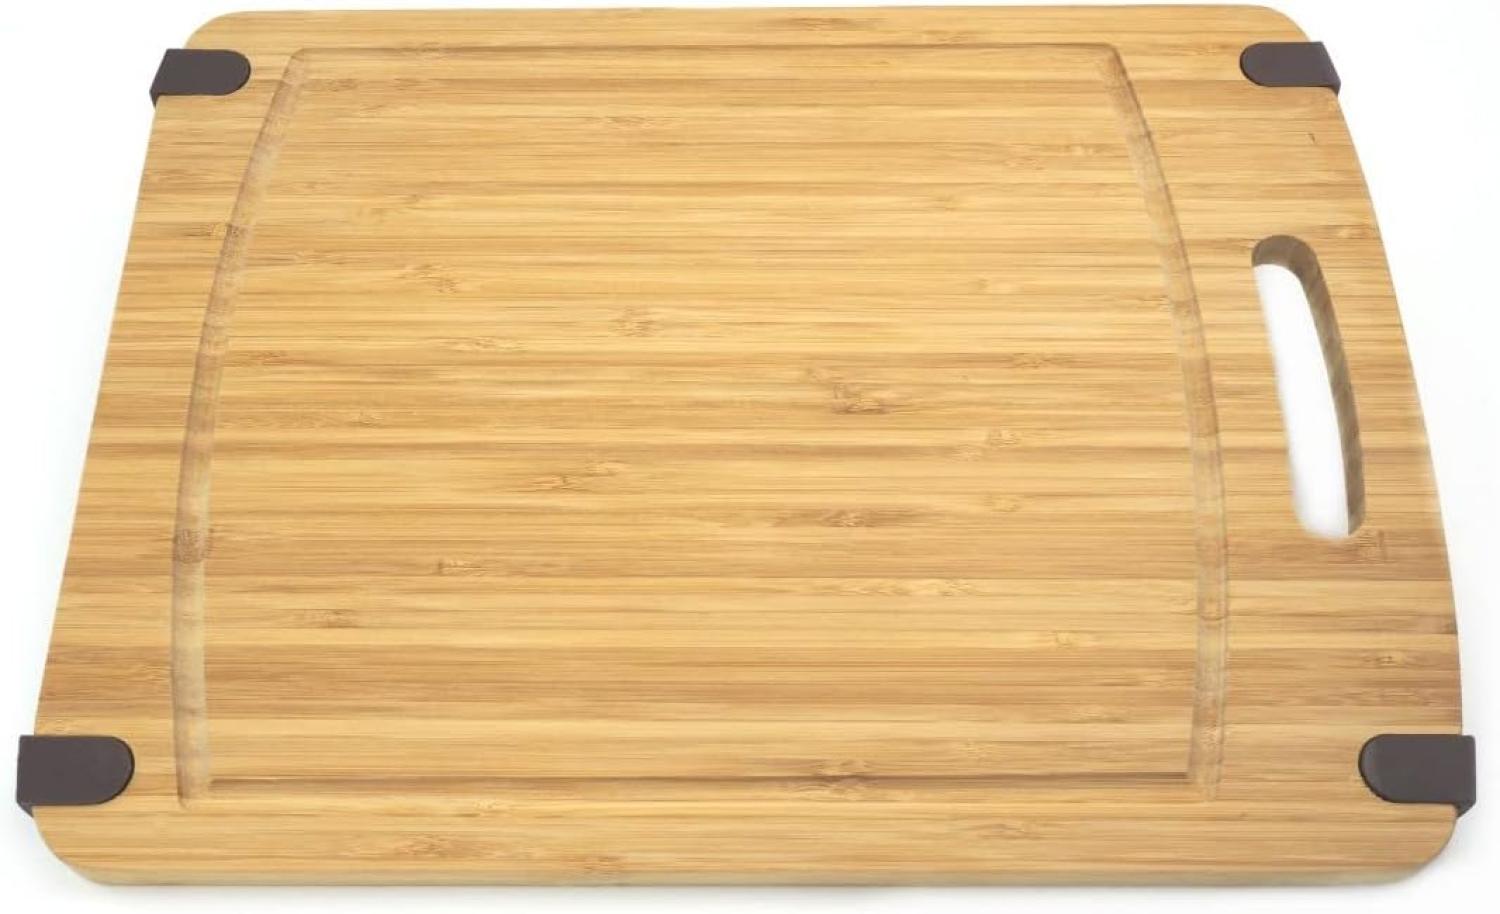 KESPER 58131 Schneidebrett aus Bambus mit Rutsch-Stopp 38 x 28 x 1,6 cm / Tranchierbrett / Schneidbrett Bild 1